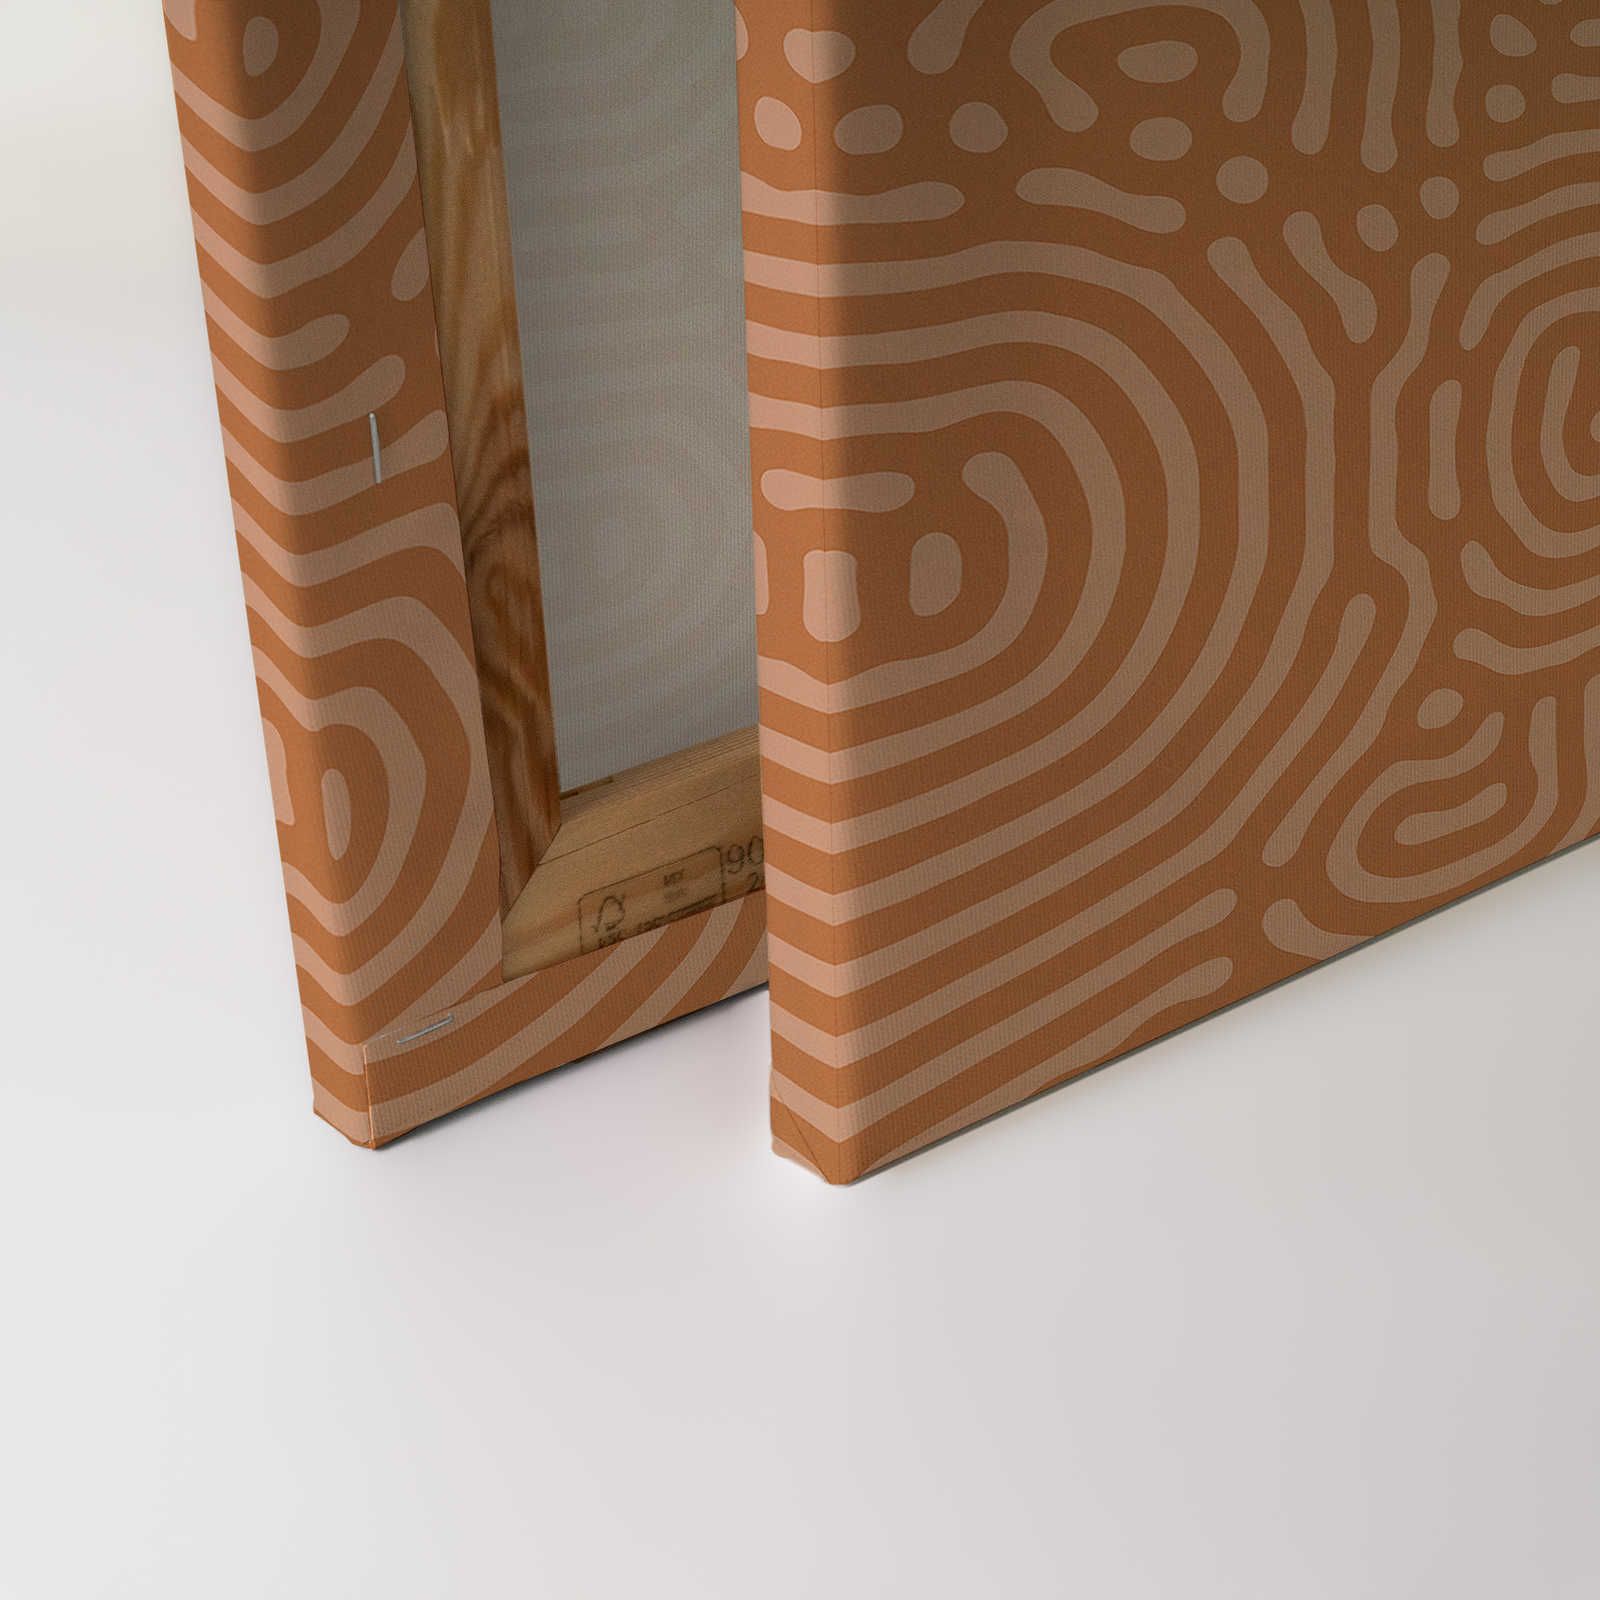             Sahel 2 - Orange Canvas painting Labyrinth Pattern Terracotta - 0.90 m x 0.60 m
        